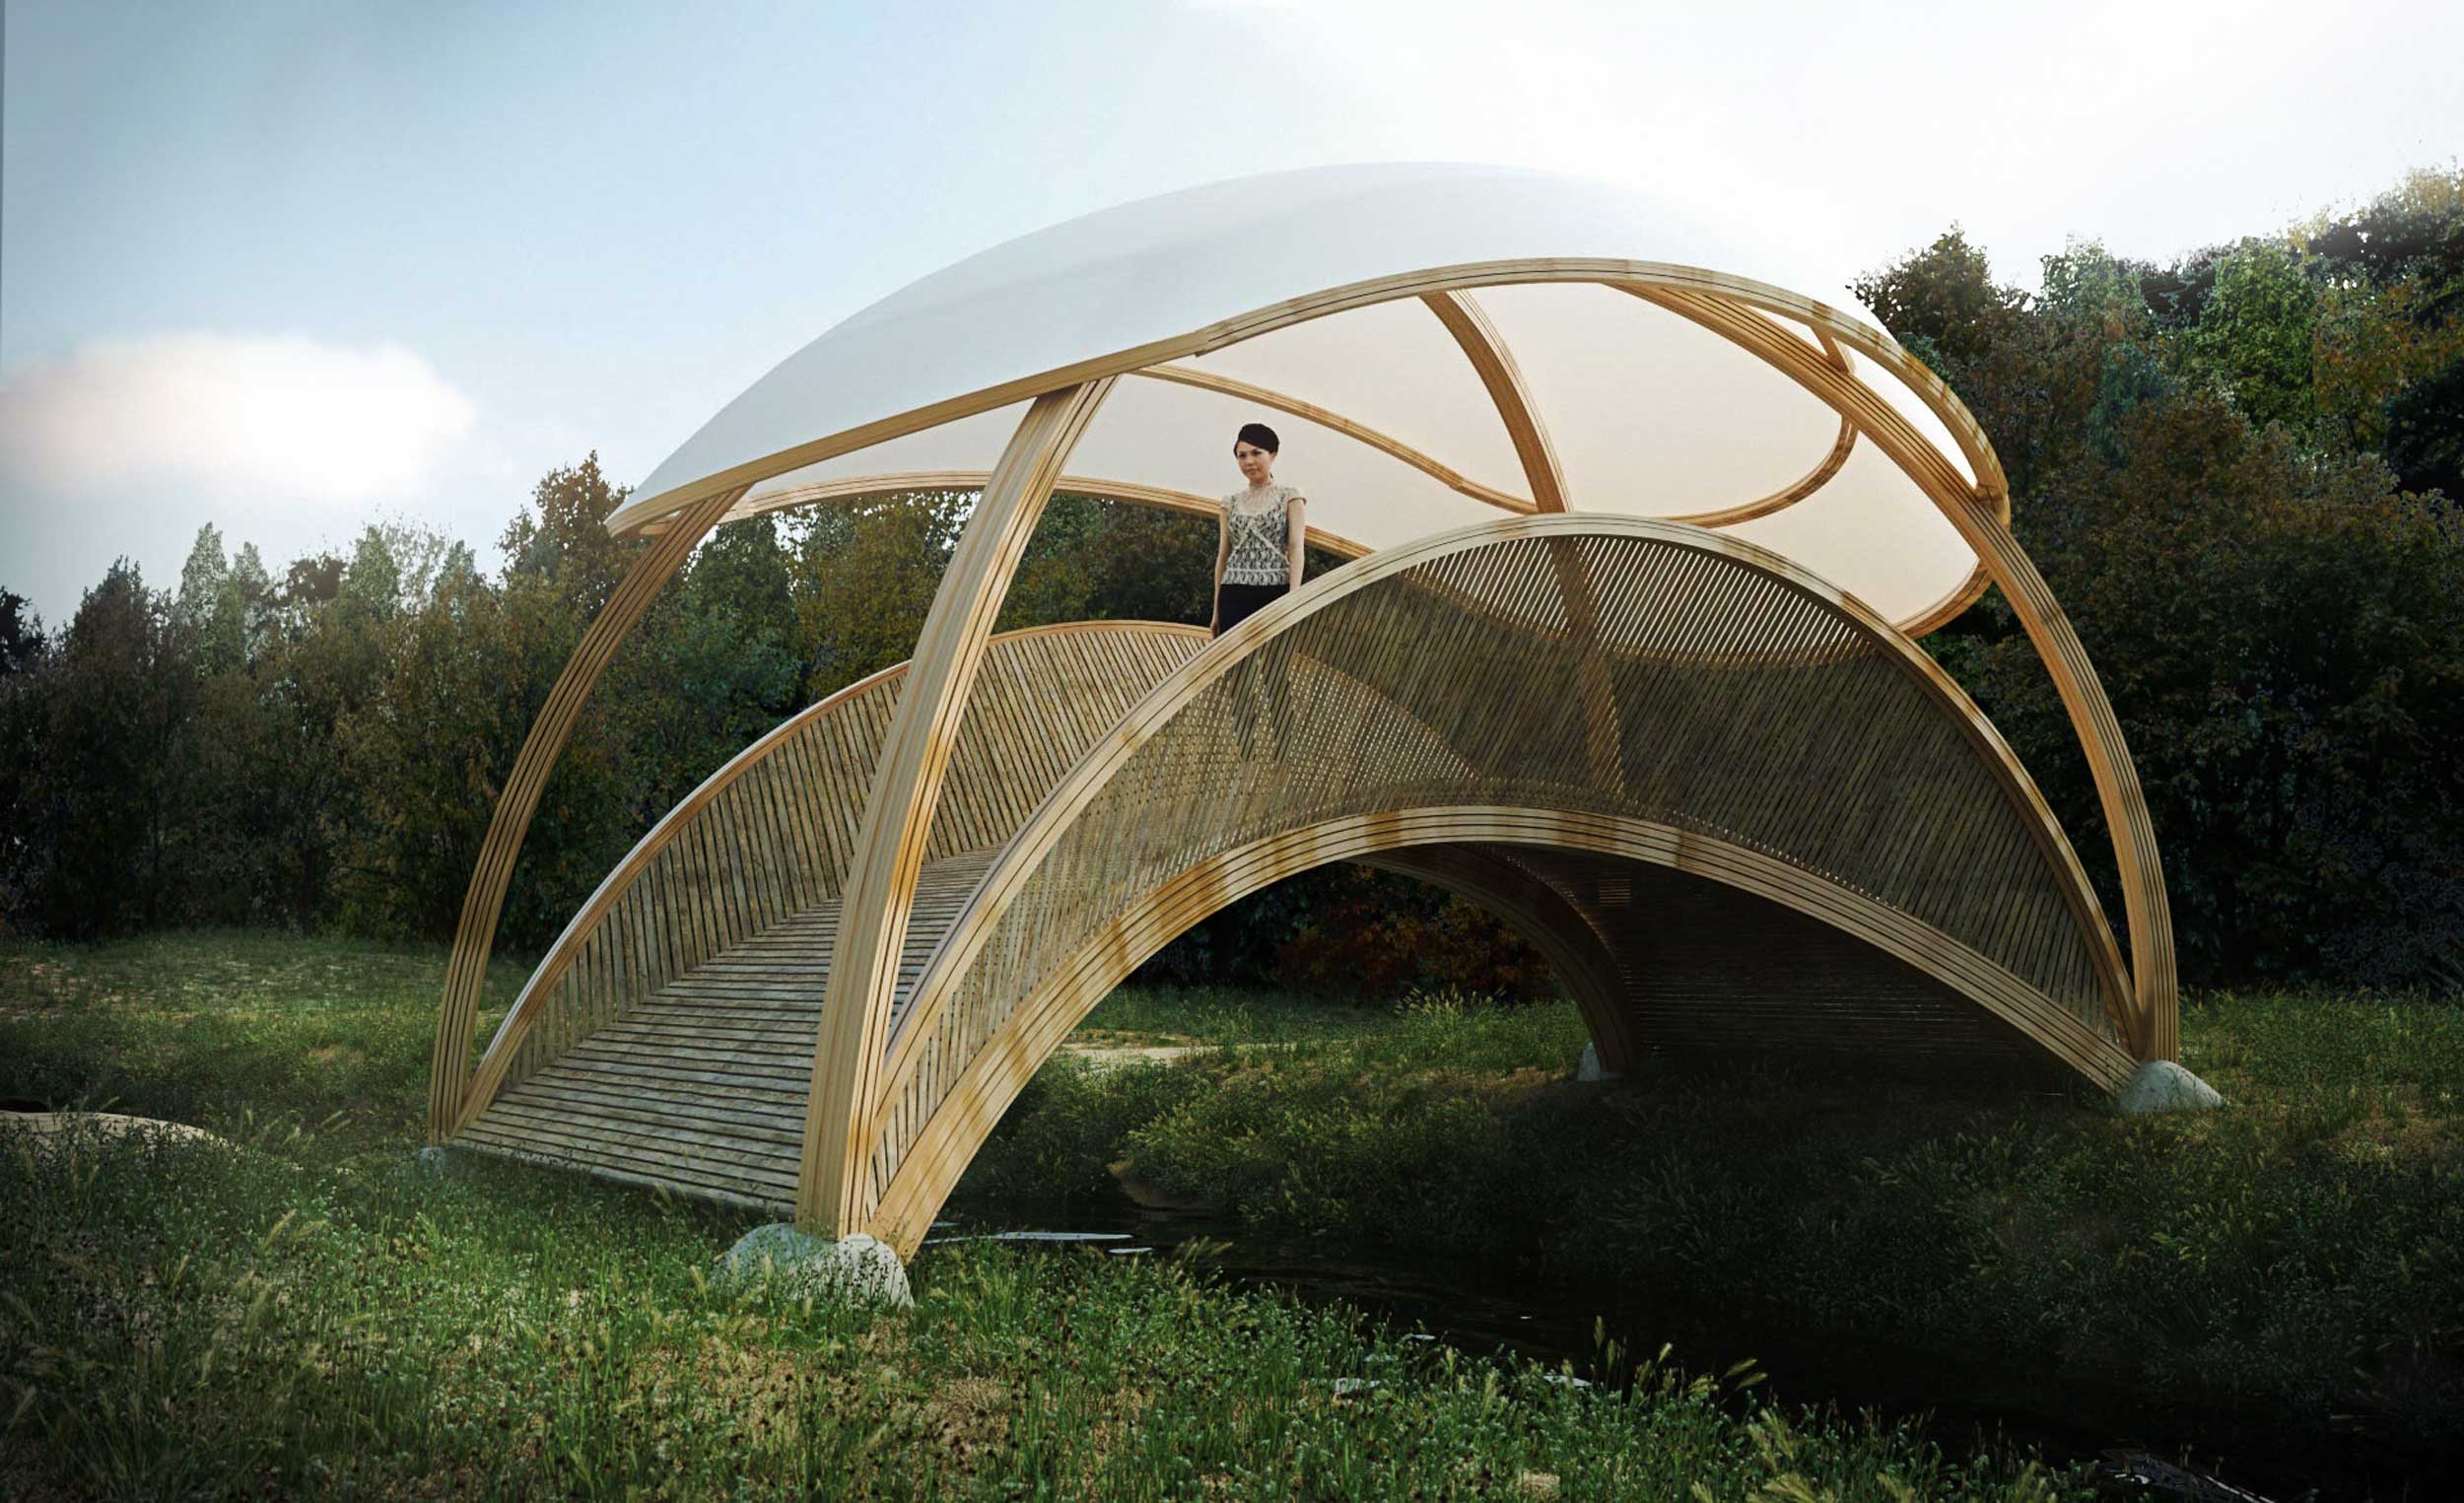 Bamboo bridge design and architectural visualizations by GPU Design